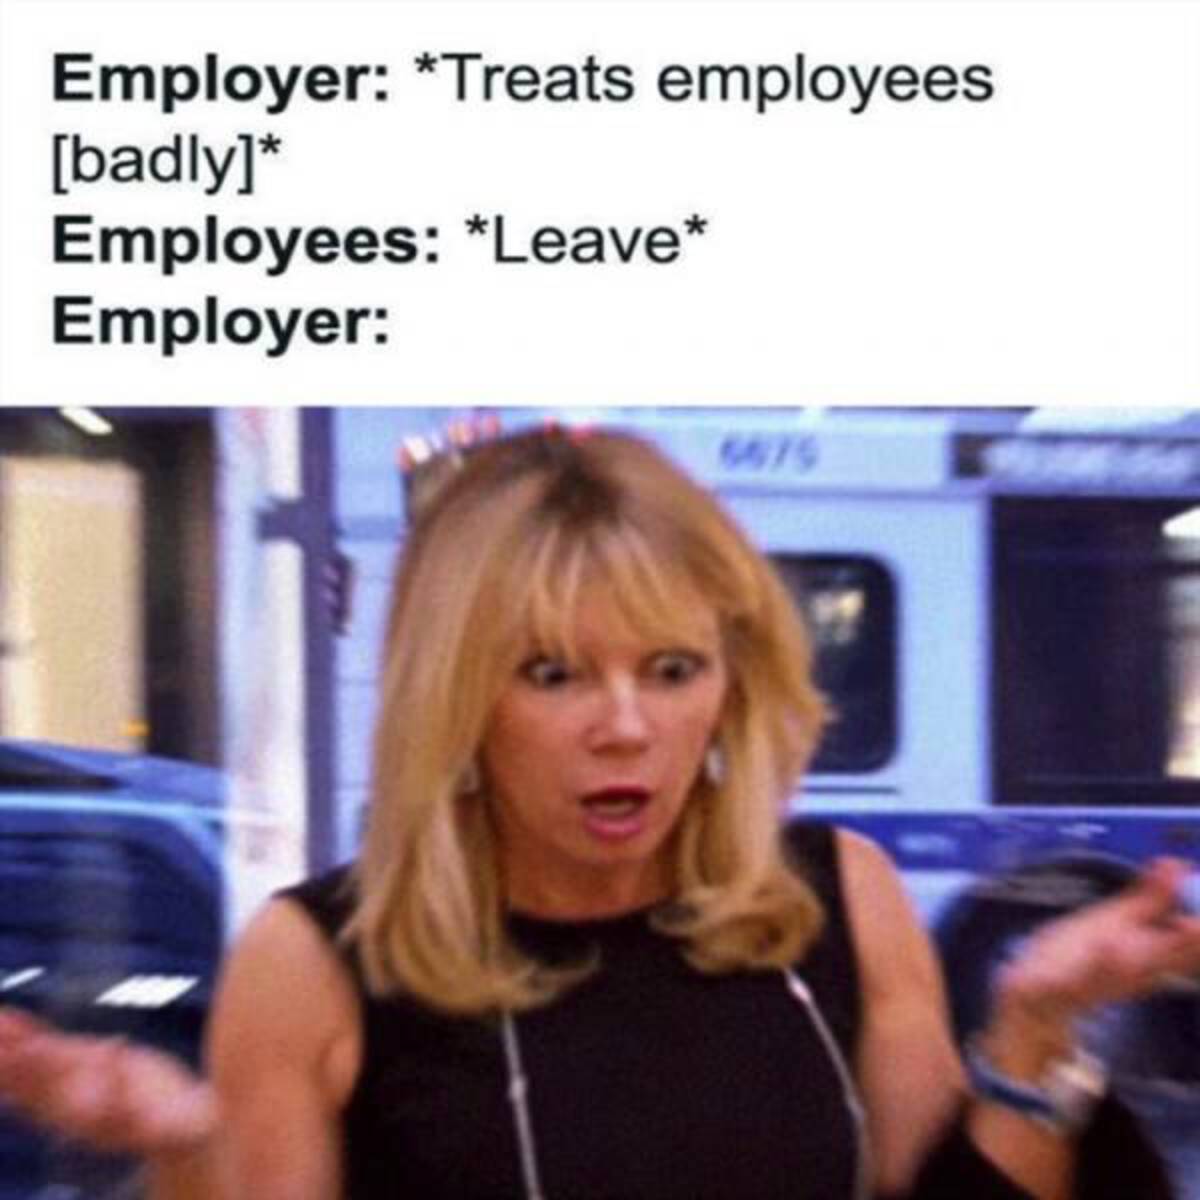 employees leave meme - Employer Treats employees badly Employees Leave Employer 6675